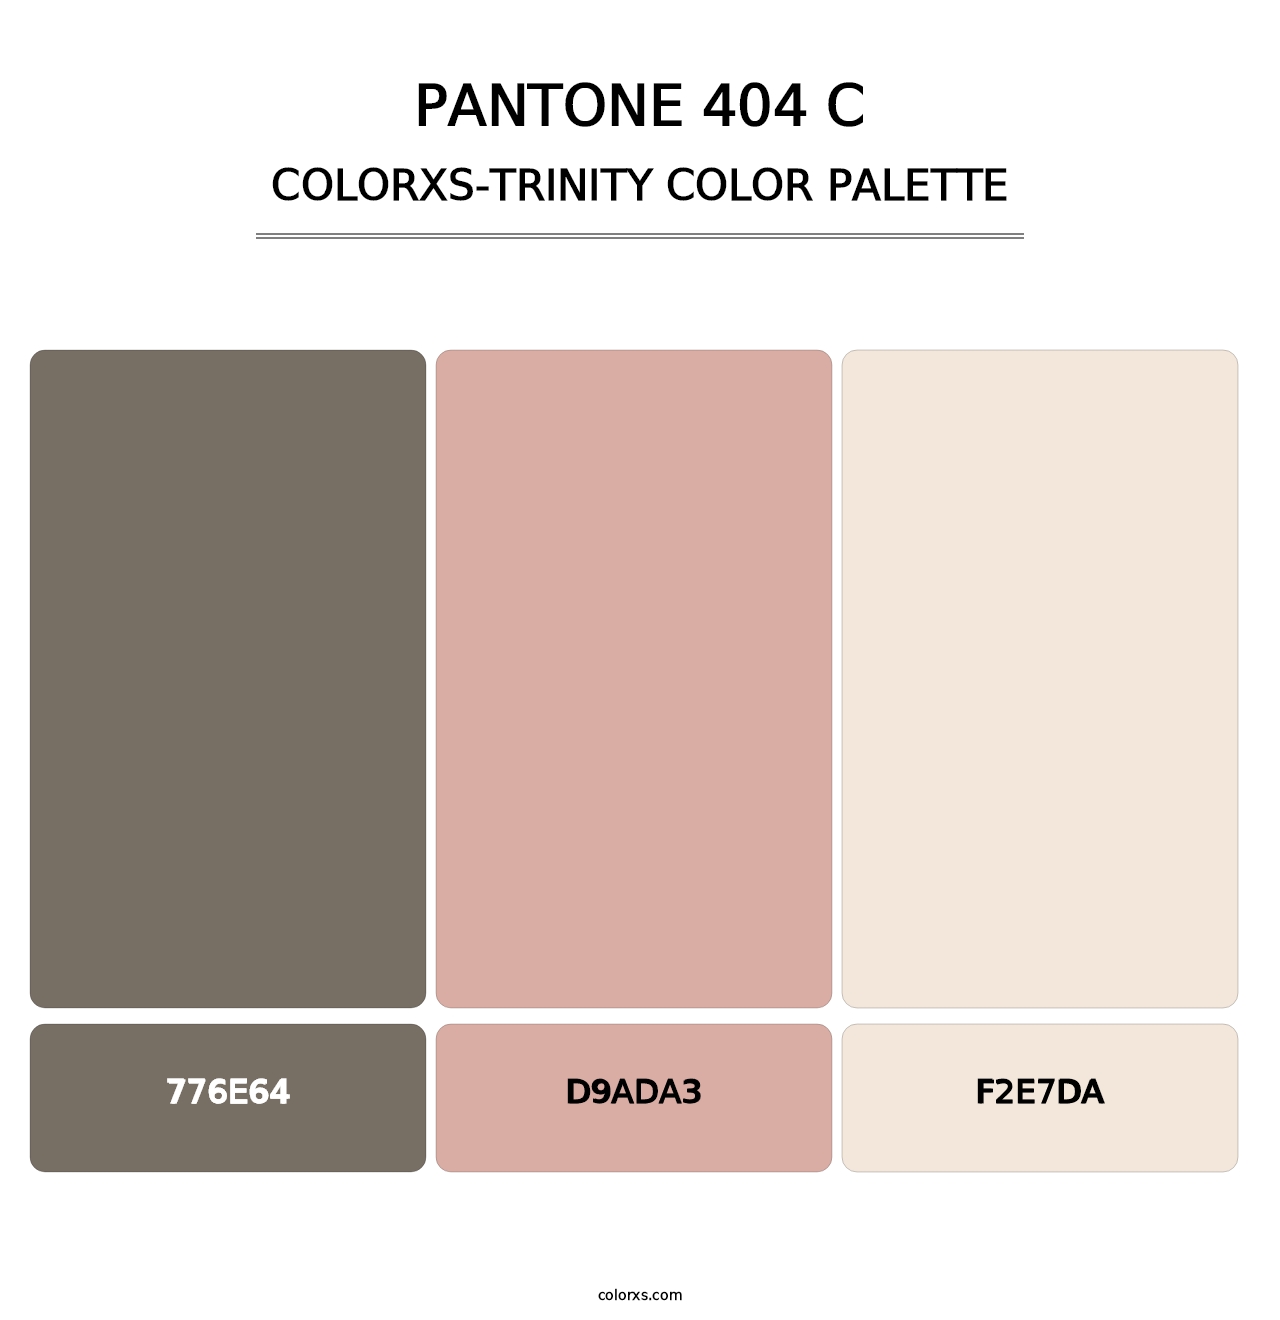 PANTONE 404 C - Colorxs Trinity Palette